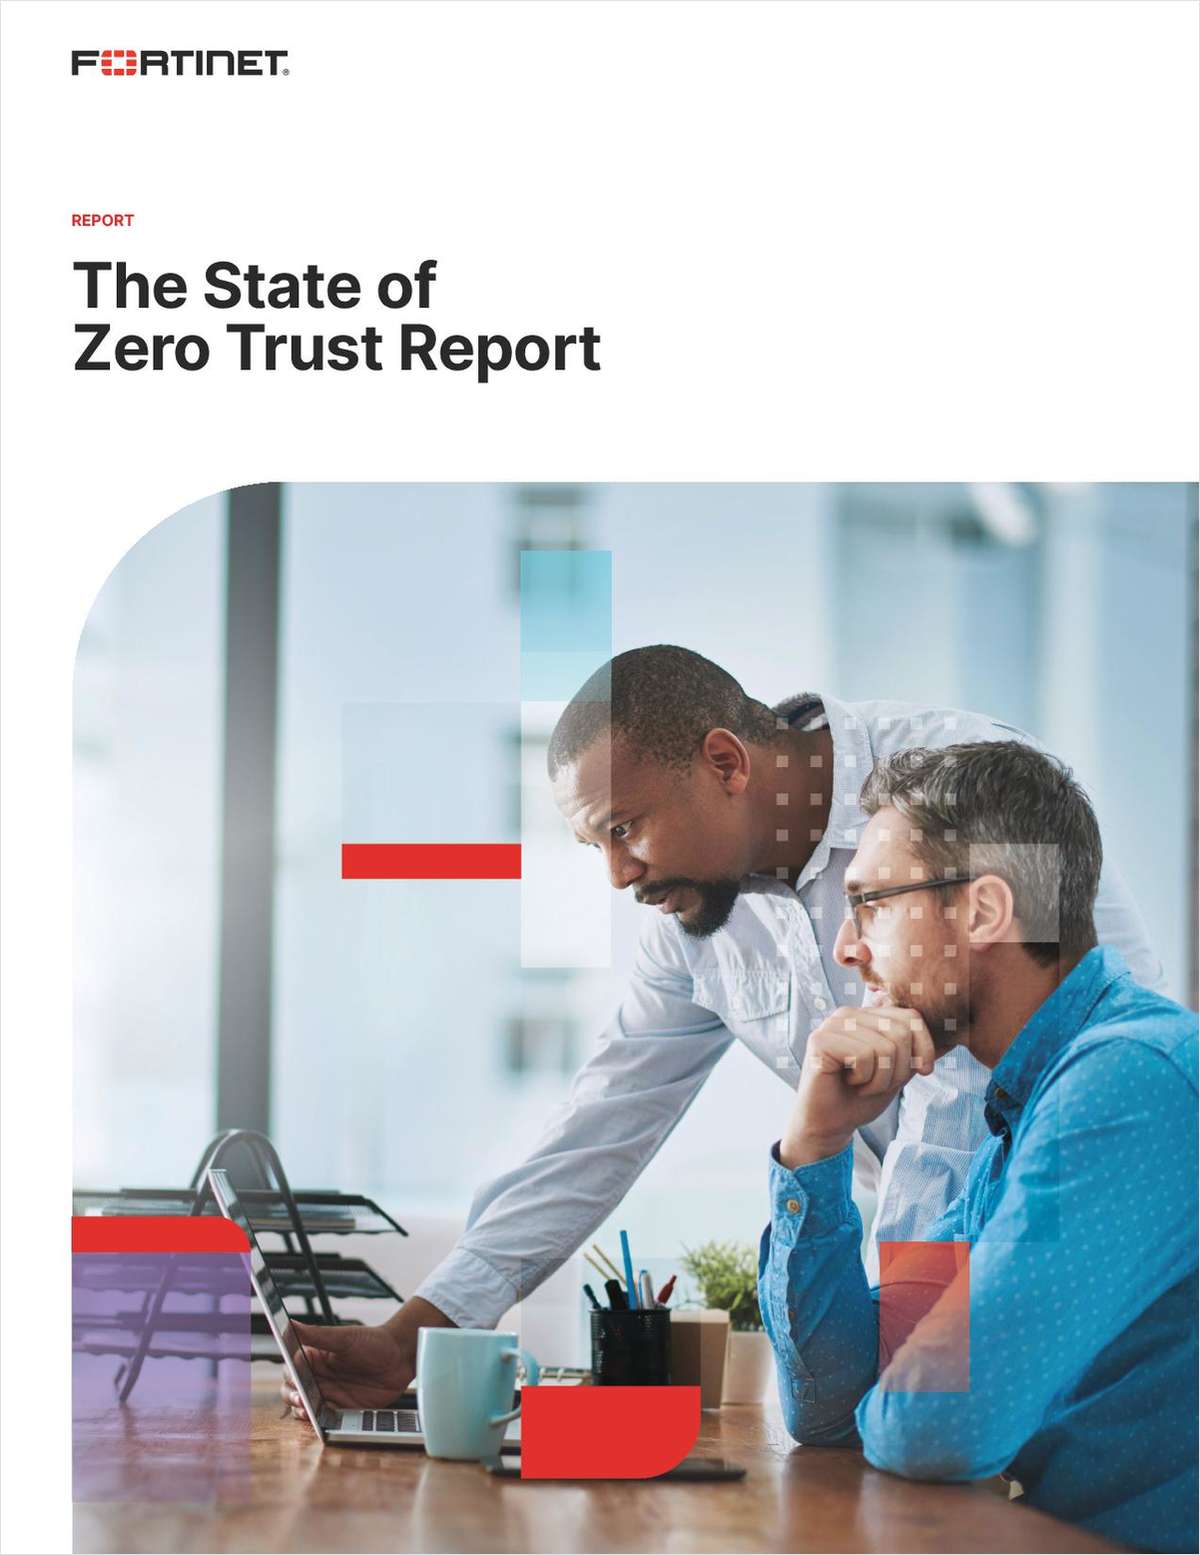 The State of Zero Trust Report